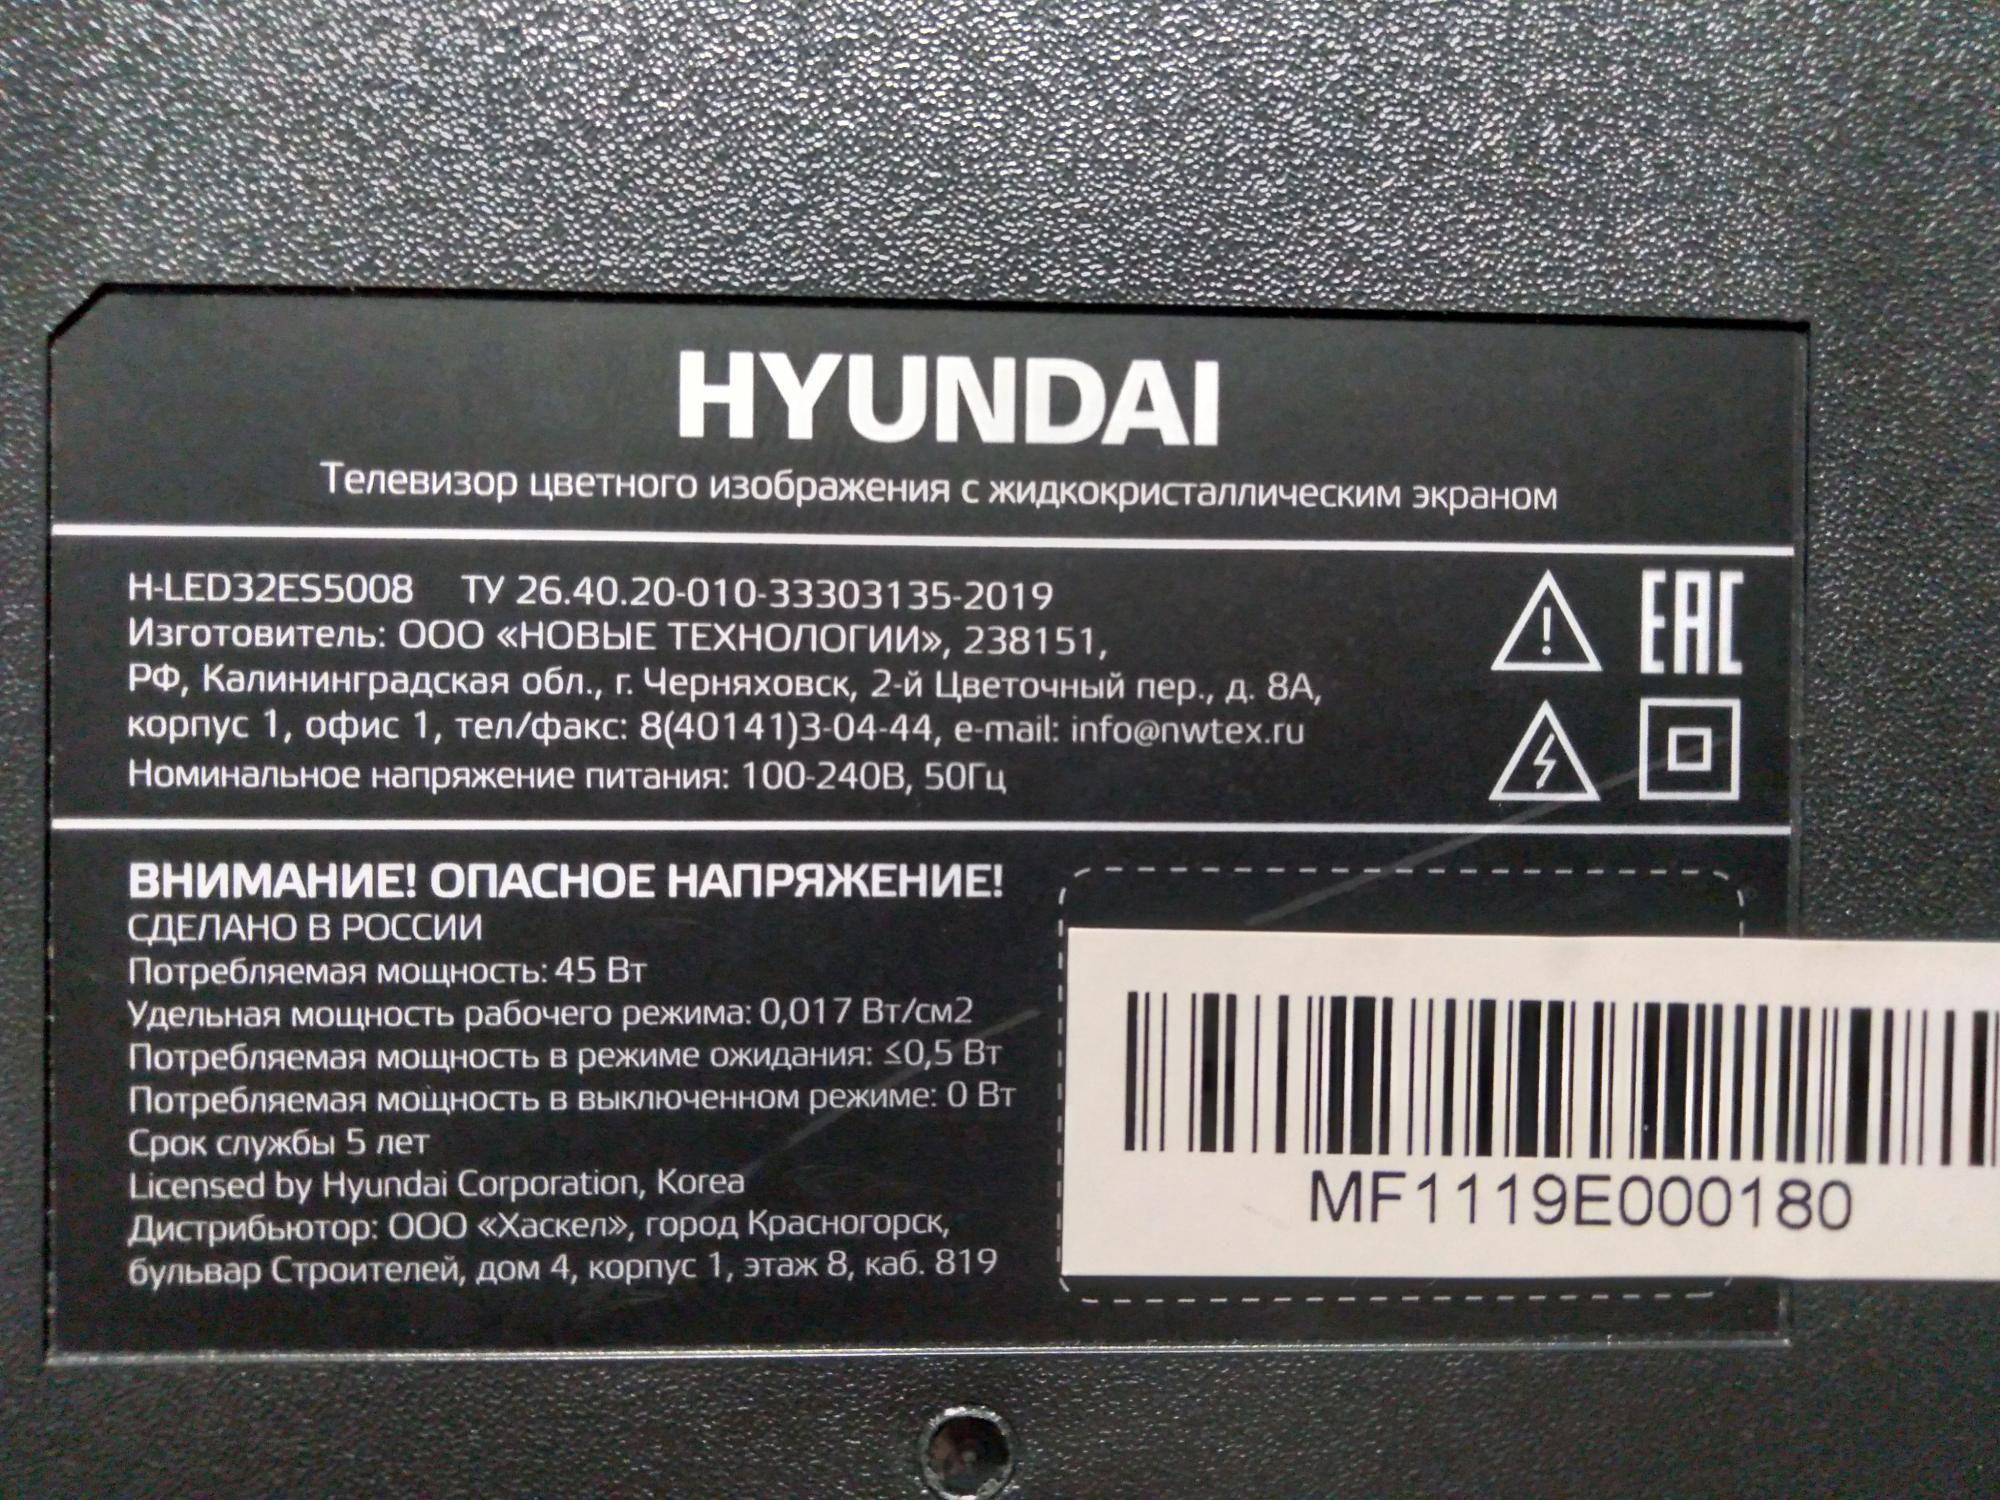 Телевизор hyundai led65bu7003. Hyundai h-led32es5008. Телевизор Hyundai h-led32es5008, 32. Hyundai h-led32es5008 коды для пульта. Телевизор Hyundai h-led32es5008 инструкция.